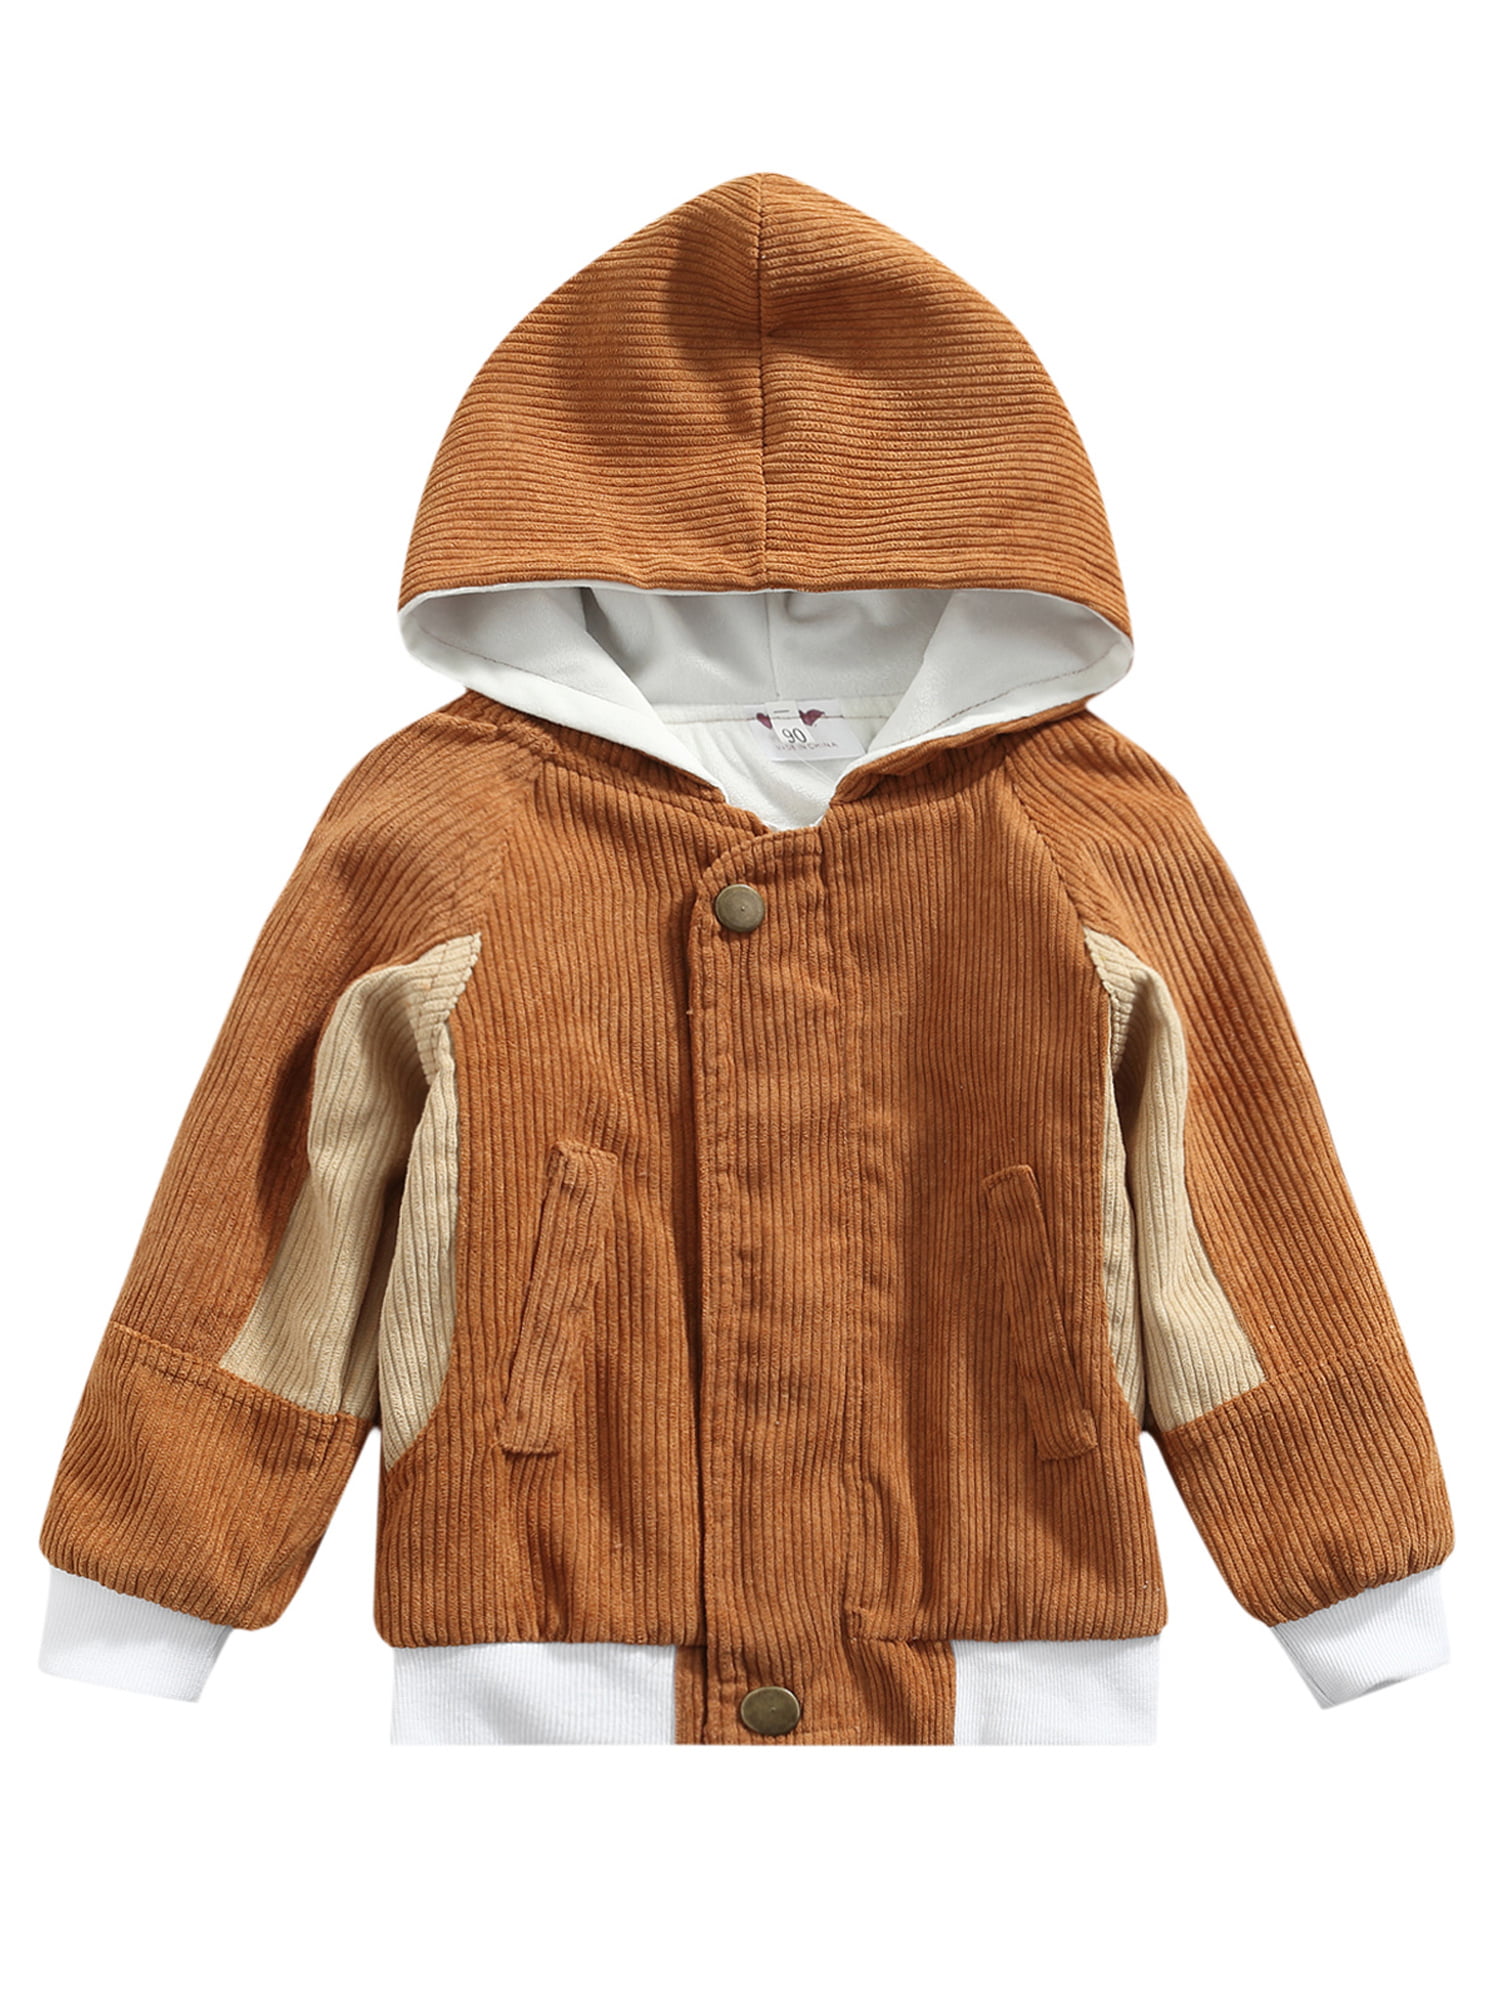 Kids Corduroy Jacket |fall Coat For Toddlers Kleding Unisex kinderkleding Jacks & Jassen Fall Outfit For Boys and Girls Unisex Kids Jacket Baby fallCoat|lightweight jacket 